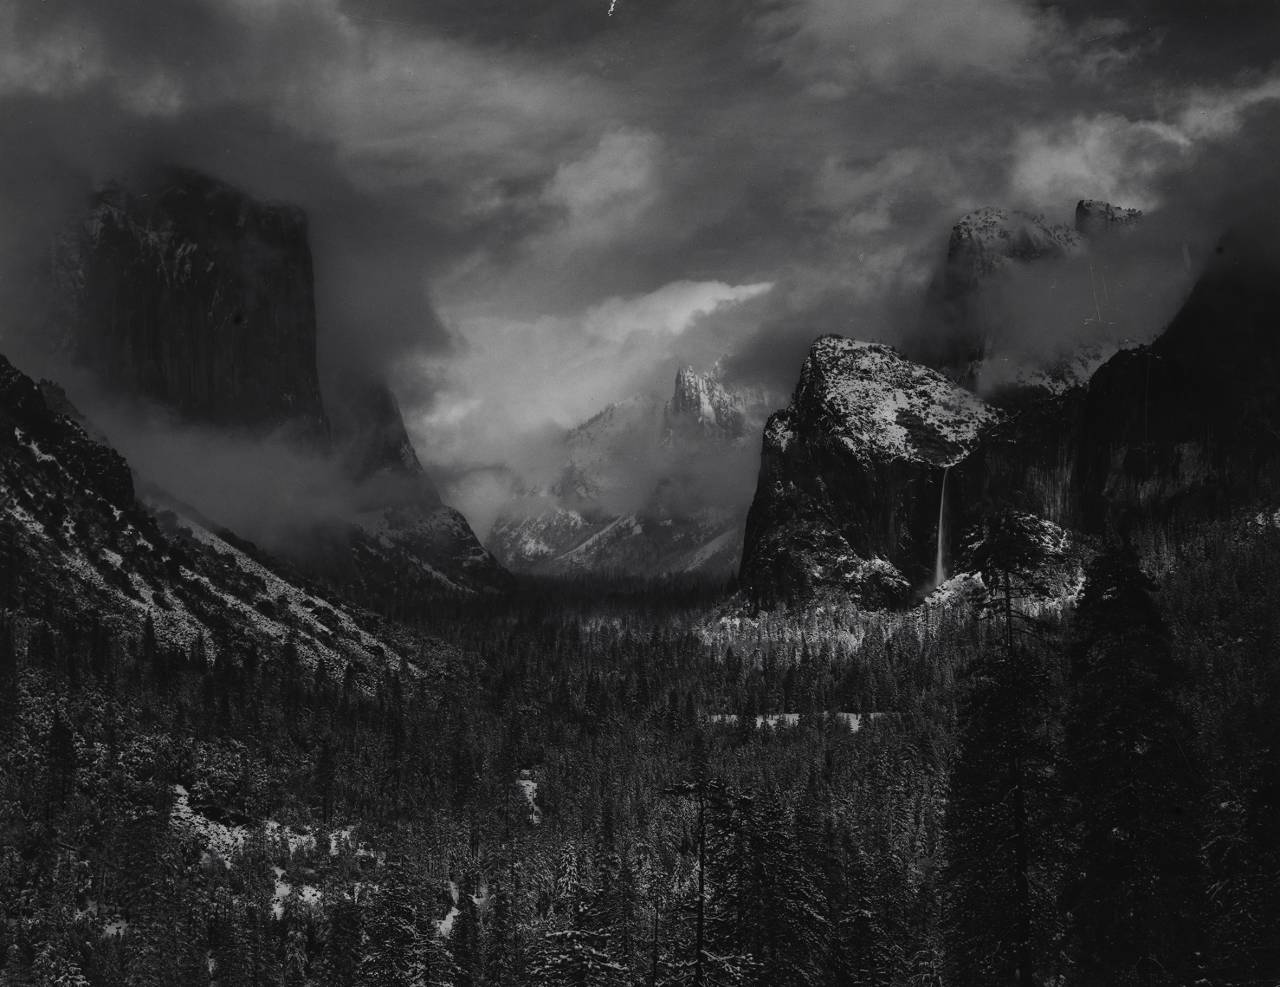  |Ansel Adams, Yosemite National Park, Kalifornien, USA, um 1937 (© National Geographic Image Collection)